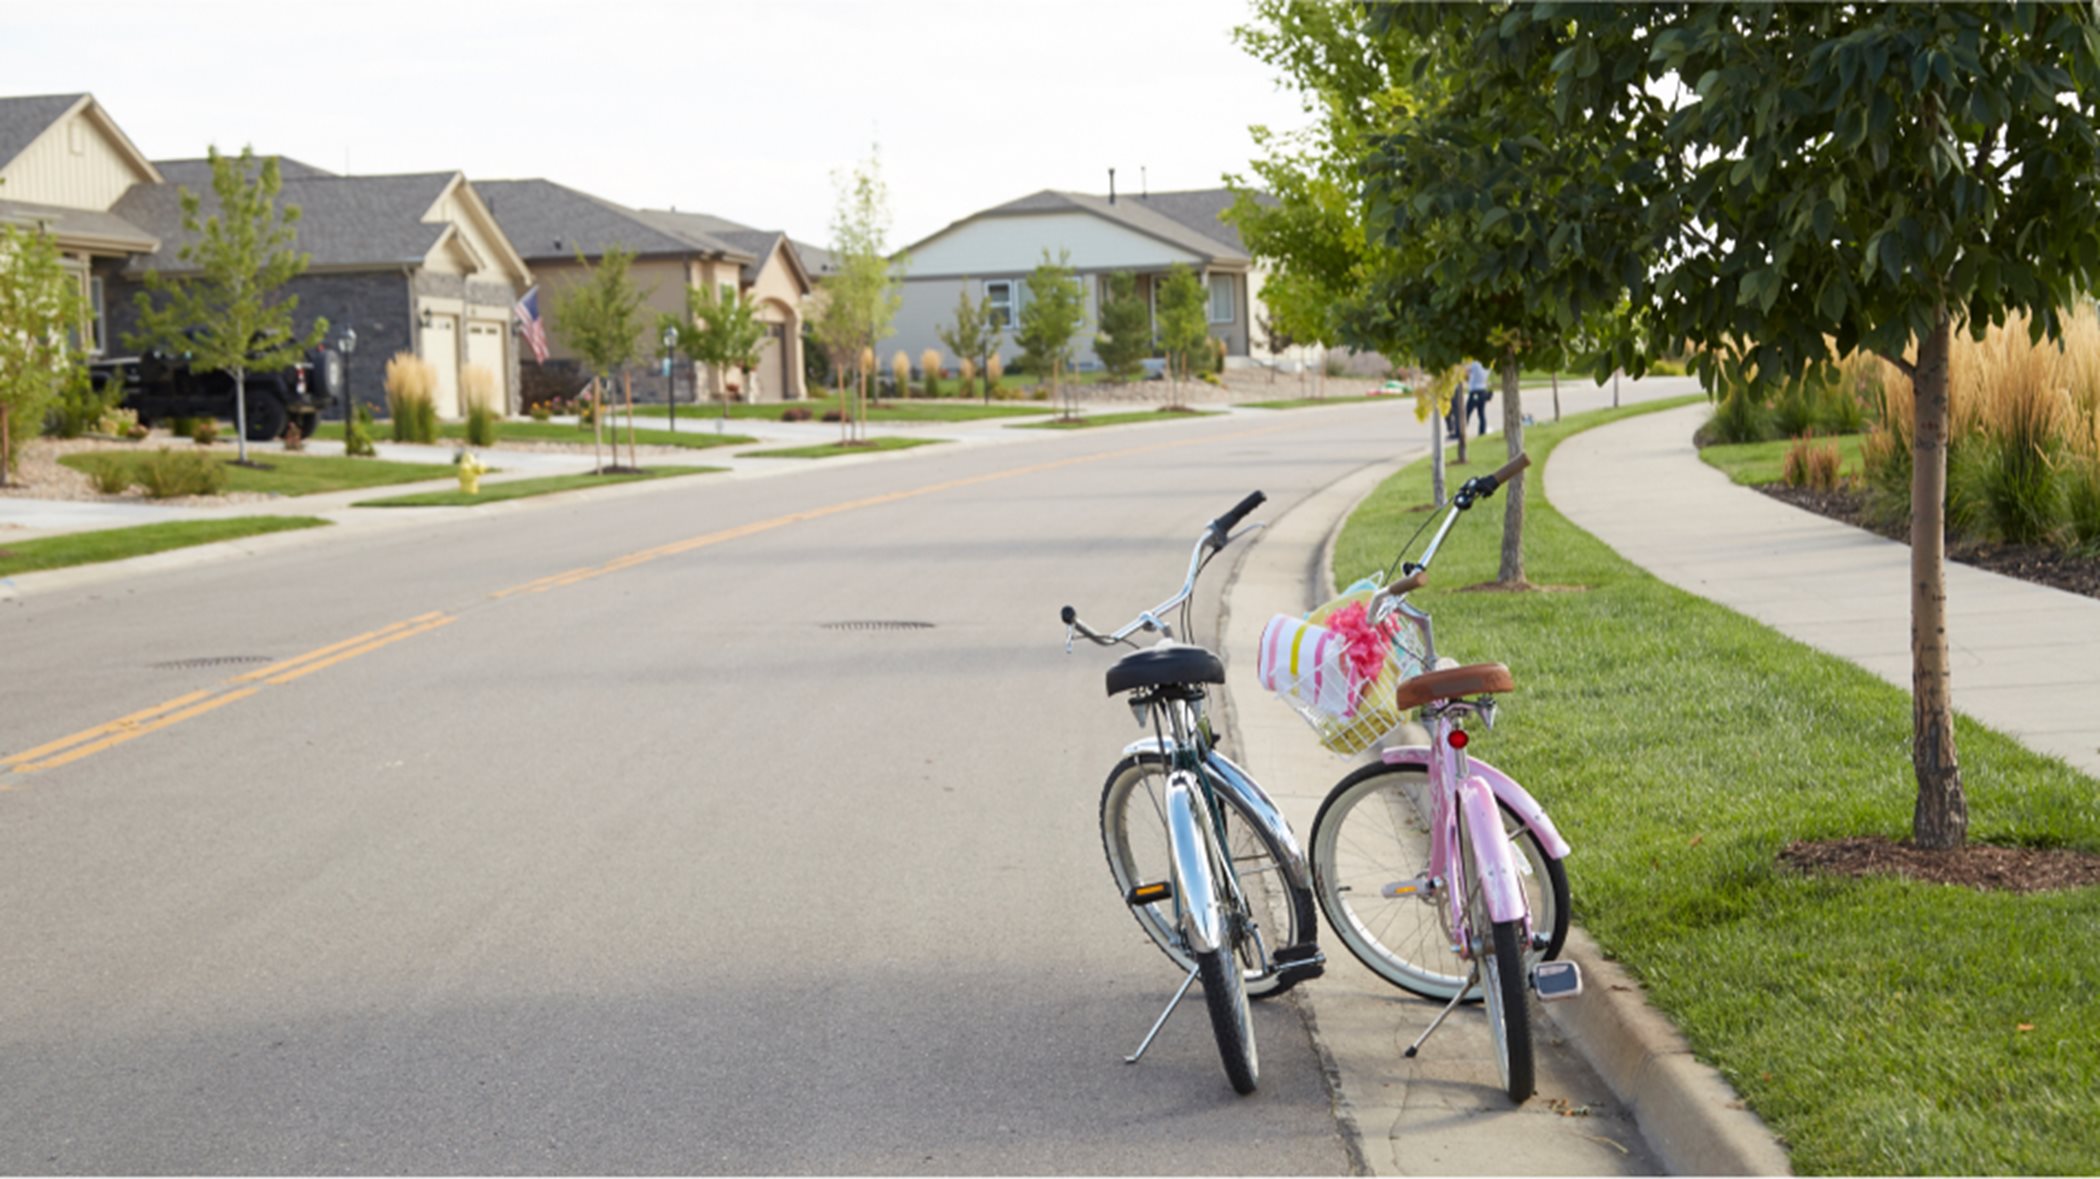 Neighborhood street scene with bikes